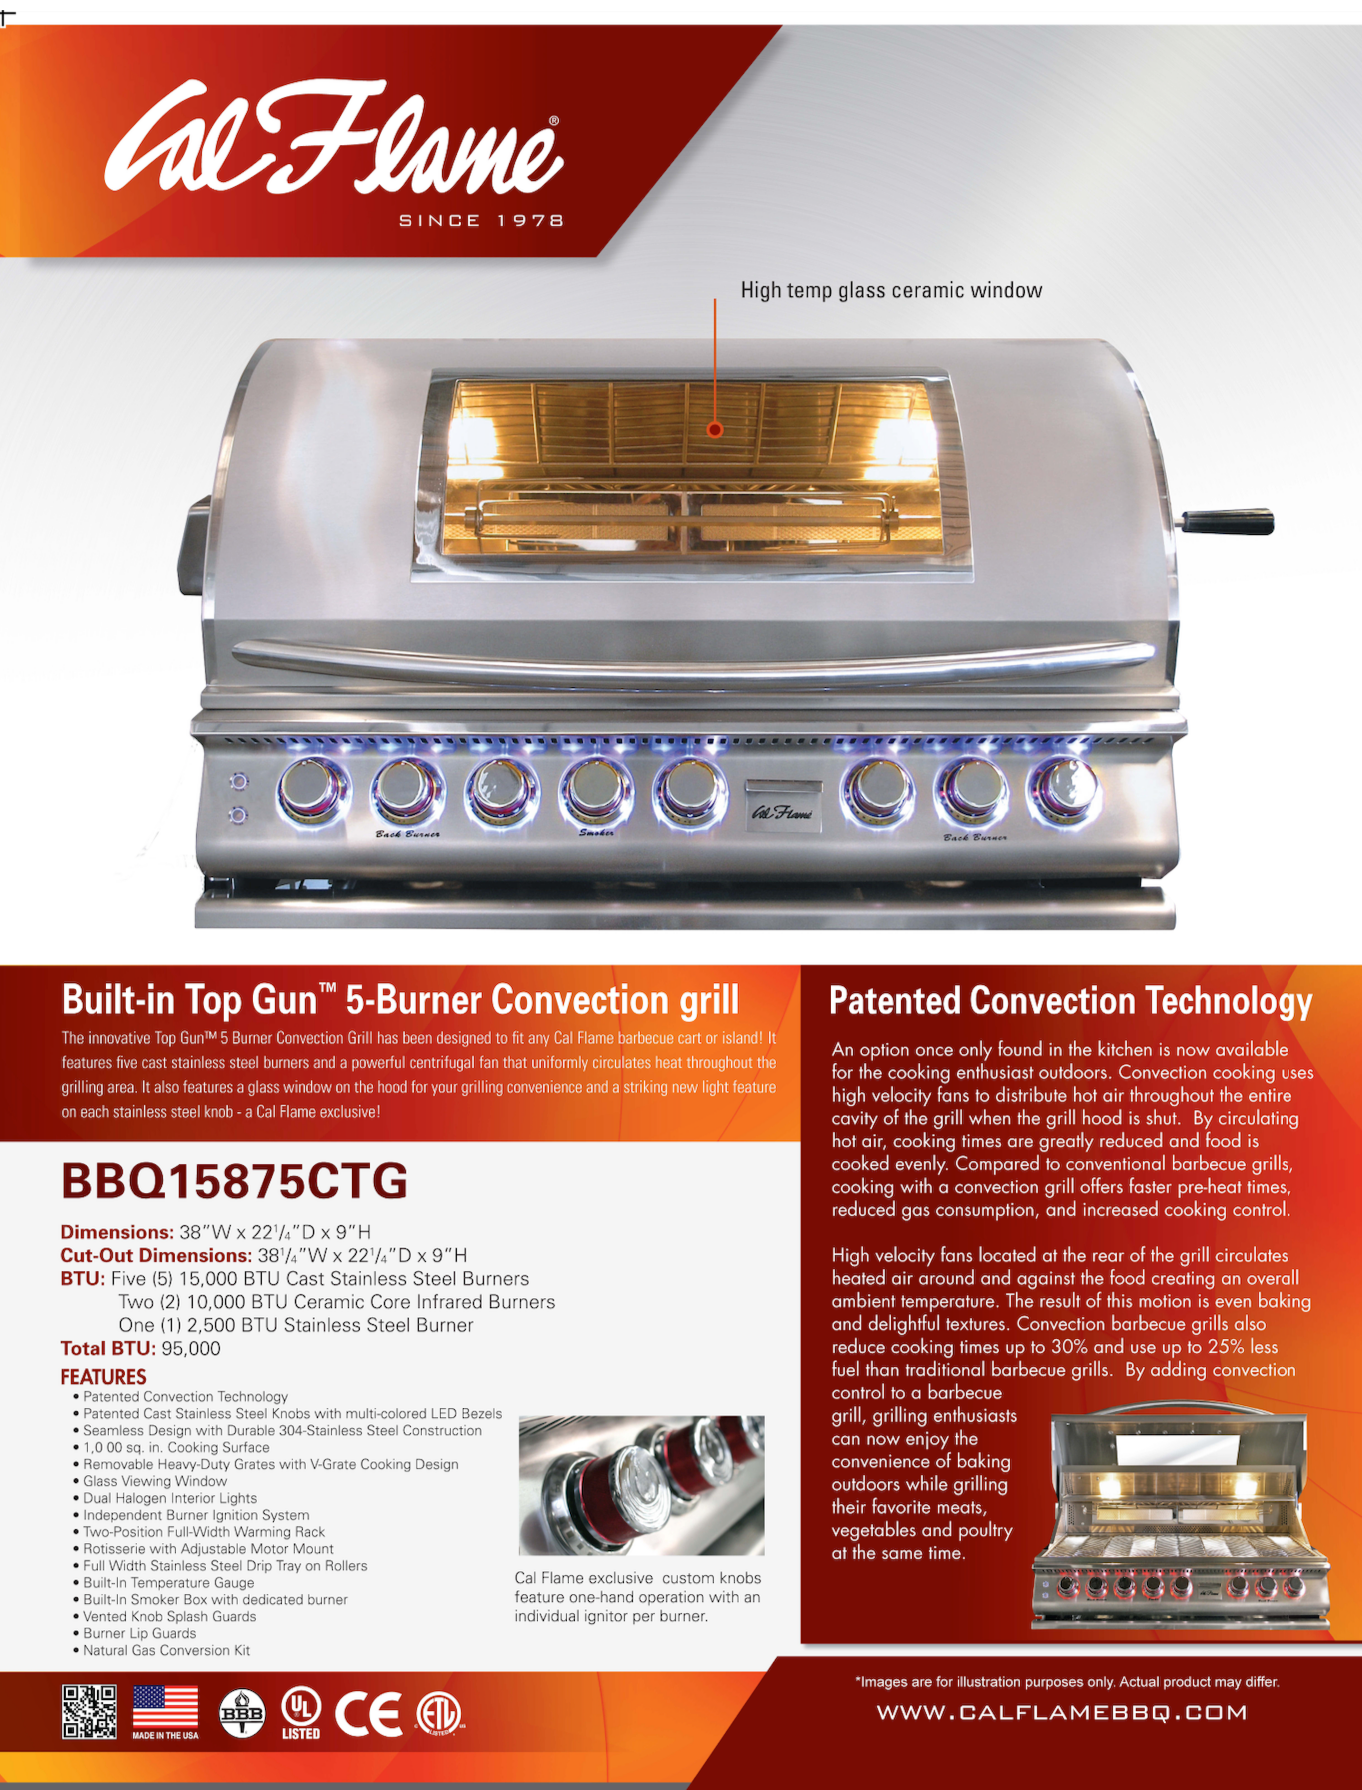 Cal Flame Top Gun™ 5-Burner Convection Grill